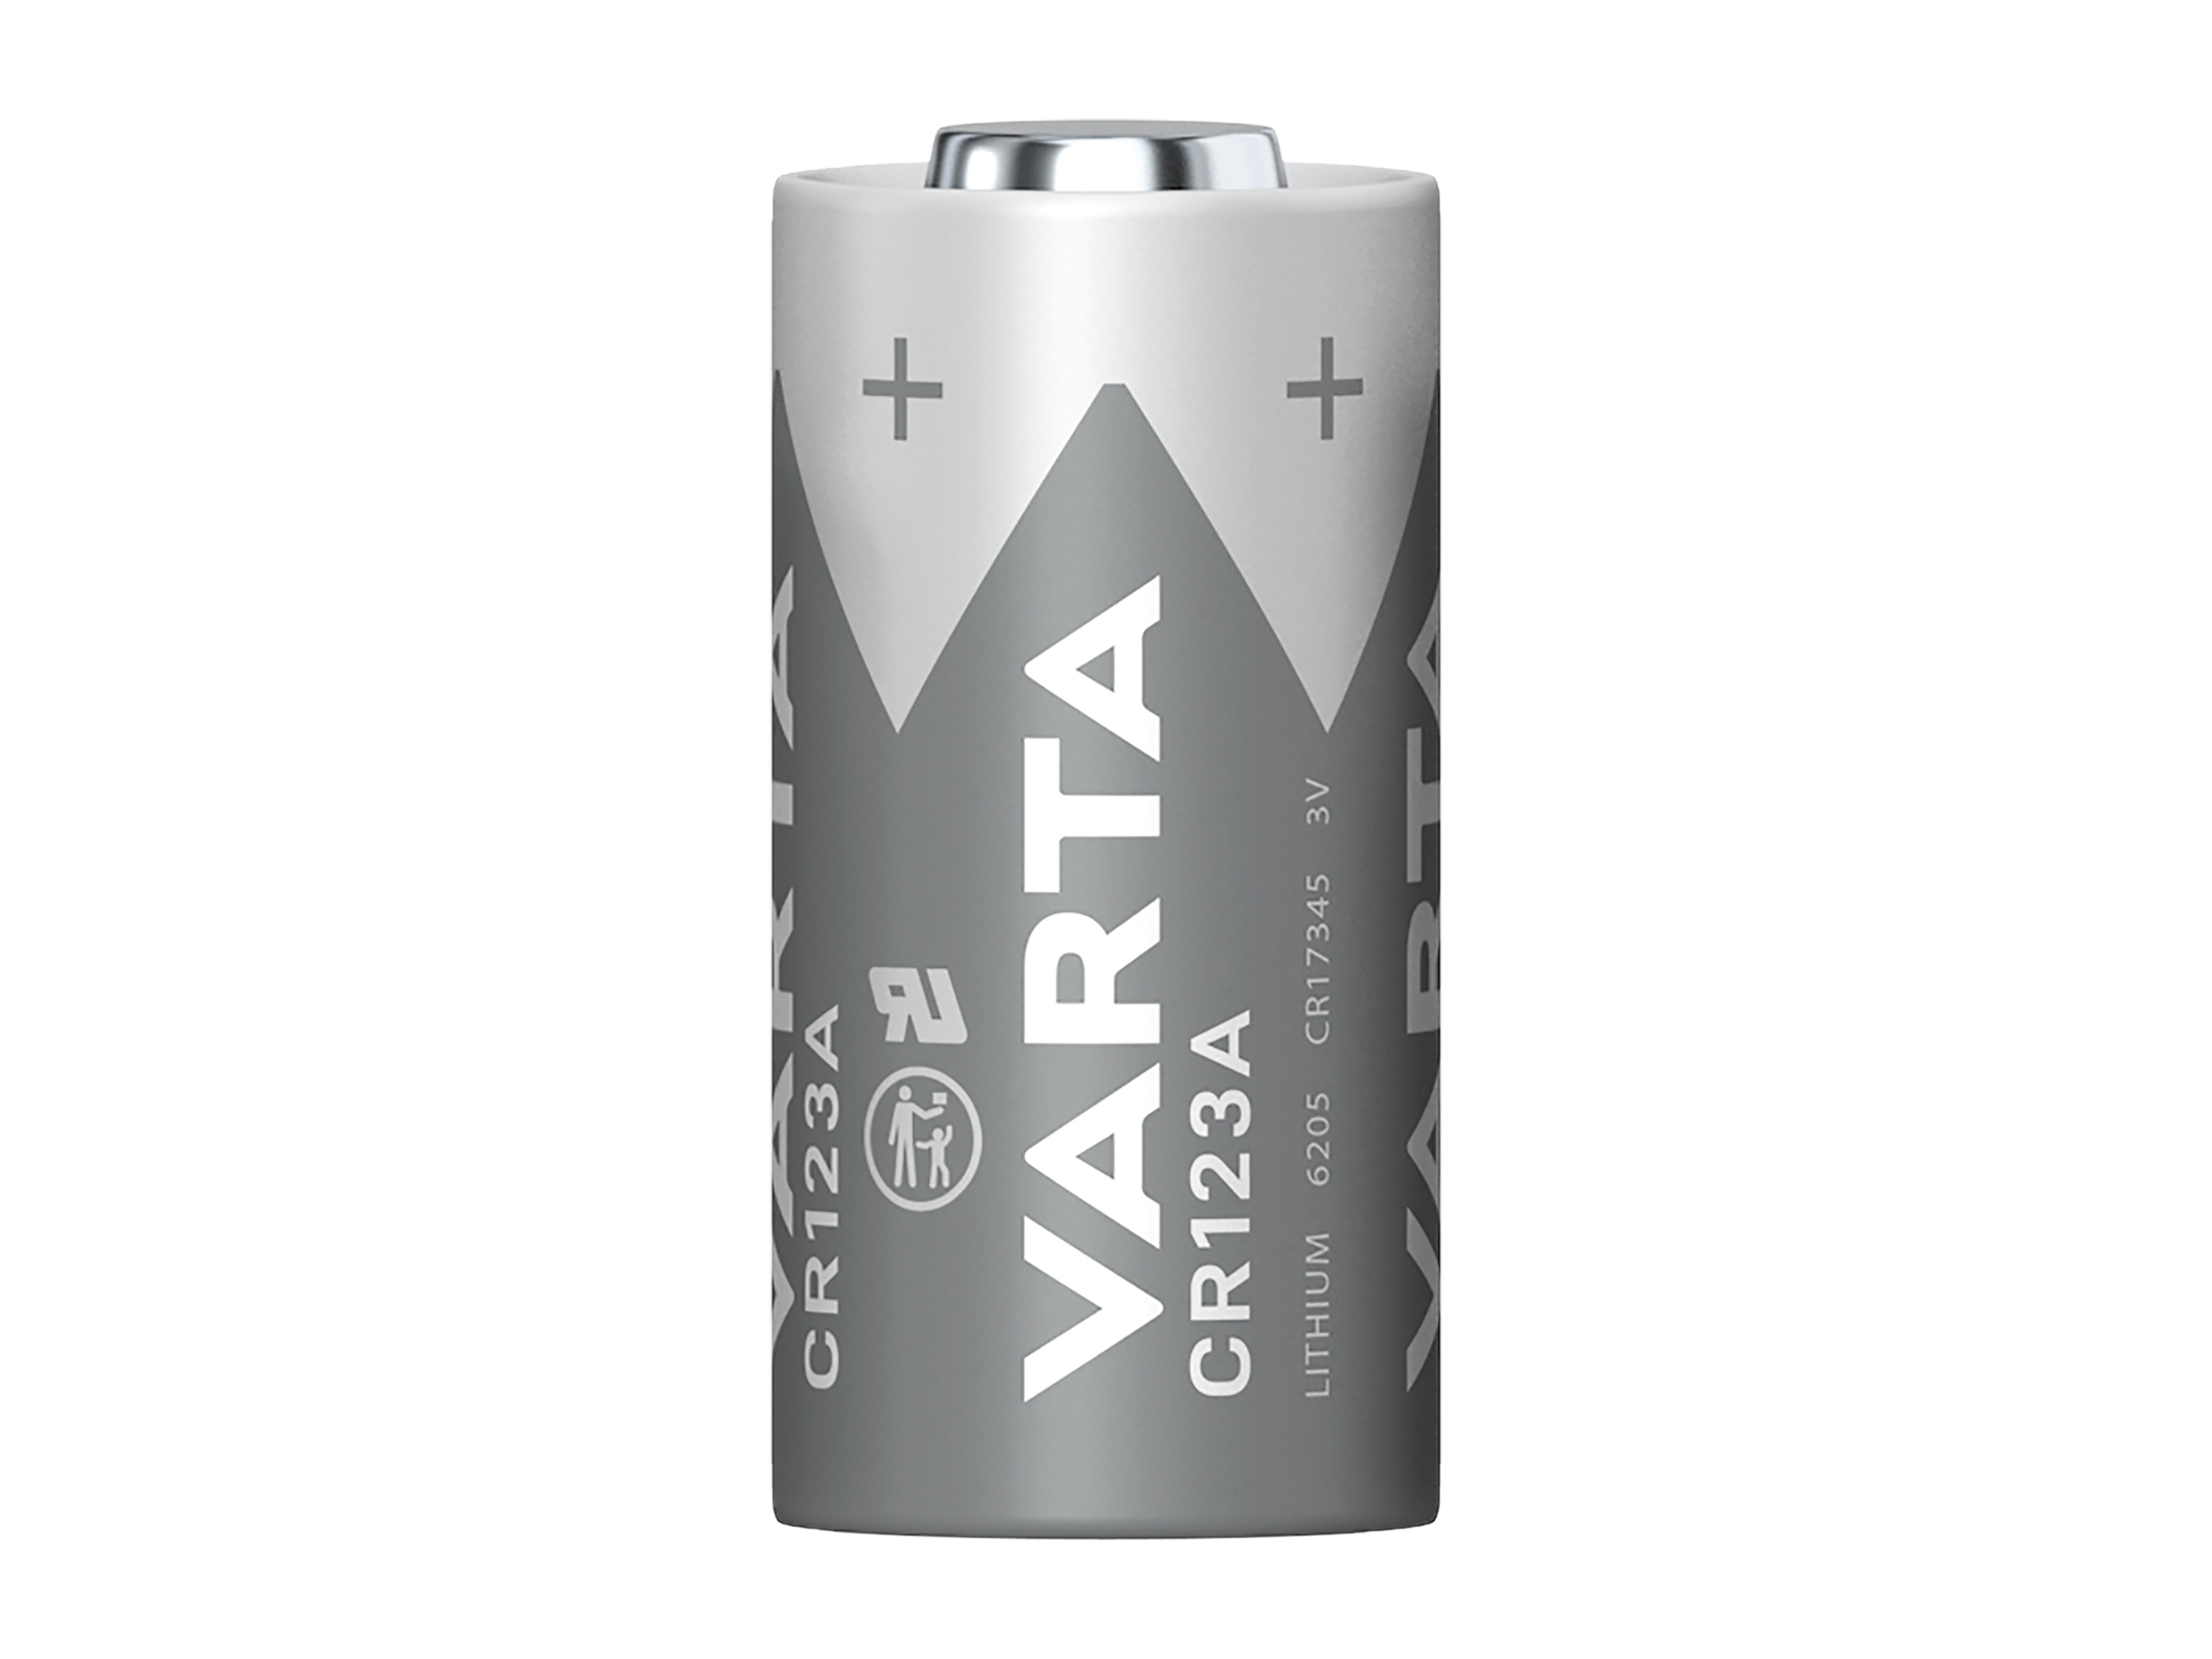 VARTA Lithium-Batterie, CR123A, 3V, Photo